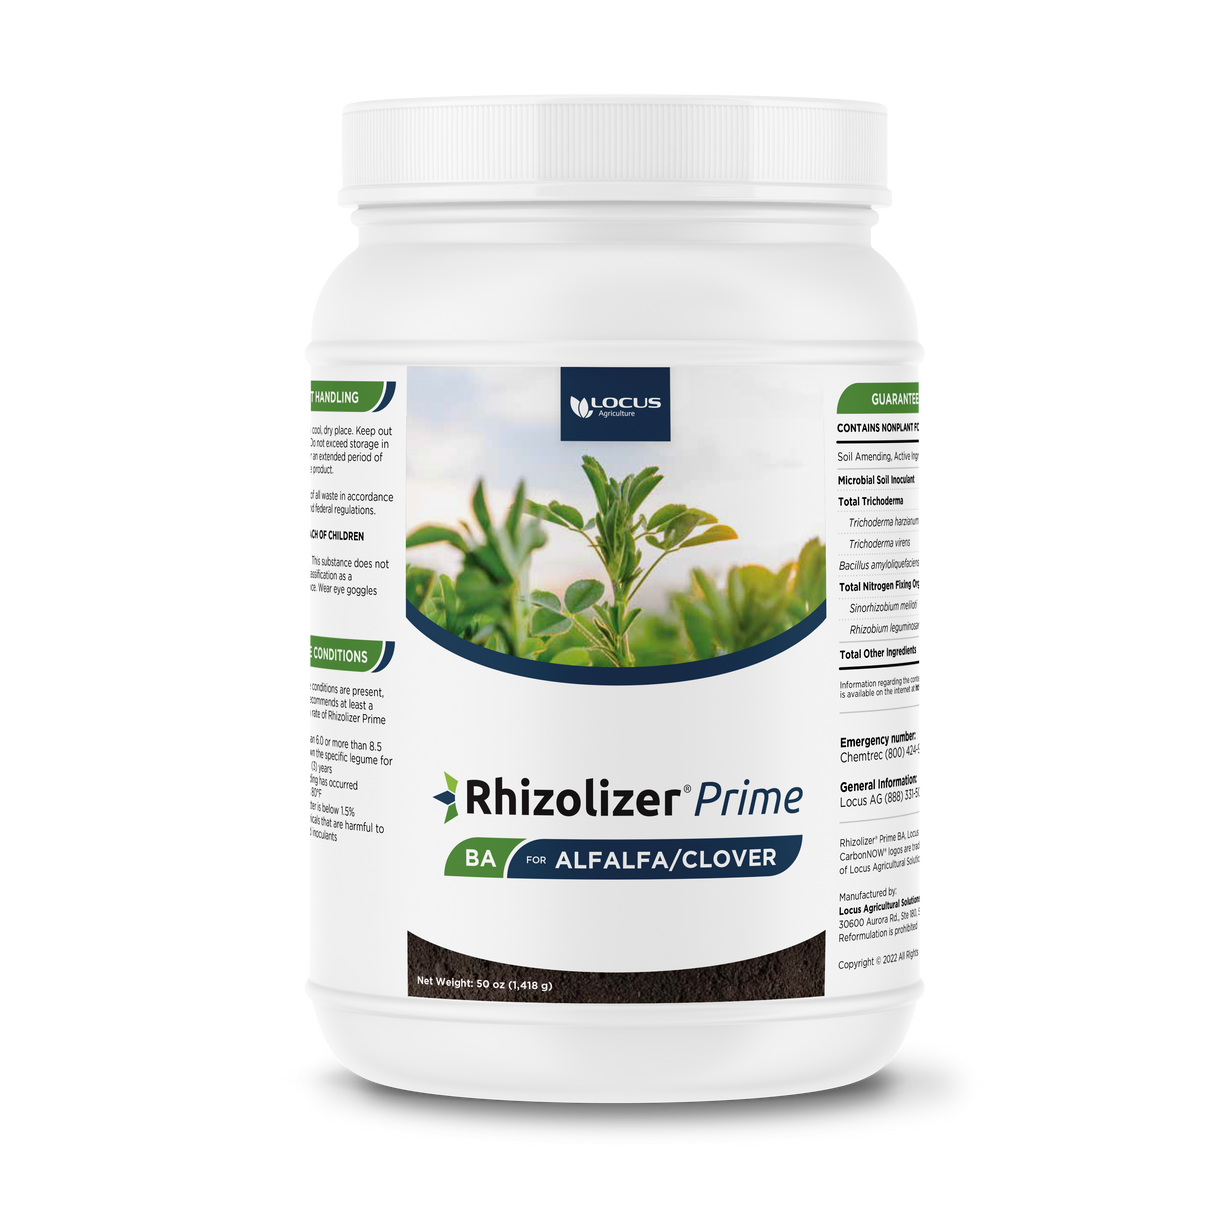 Rhizolizer® Prime for Alfalfa/Clover